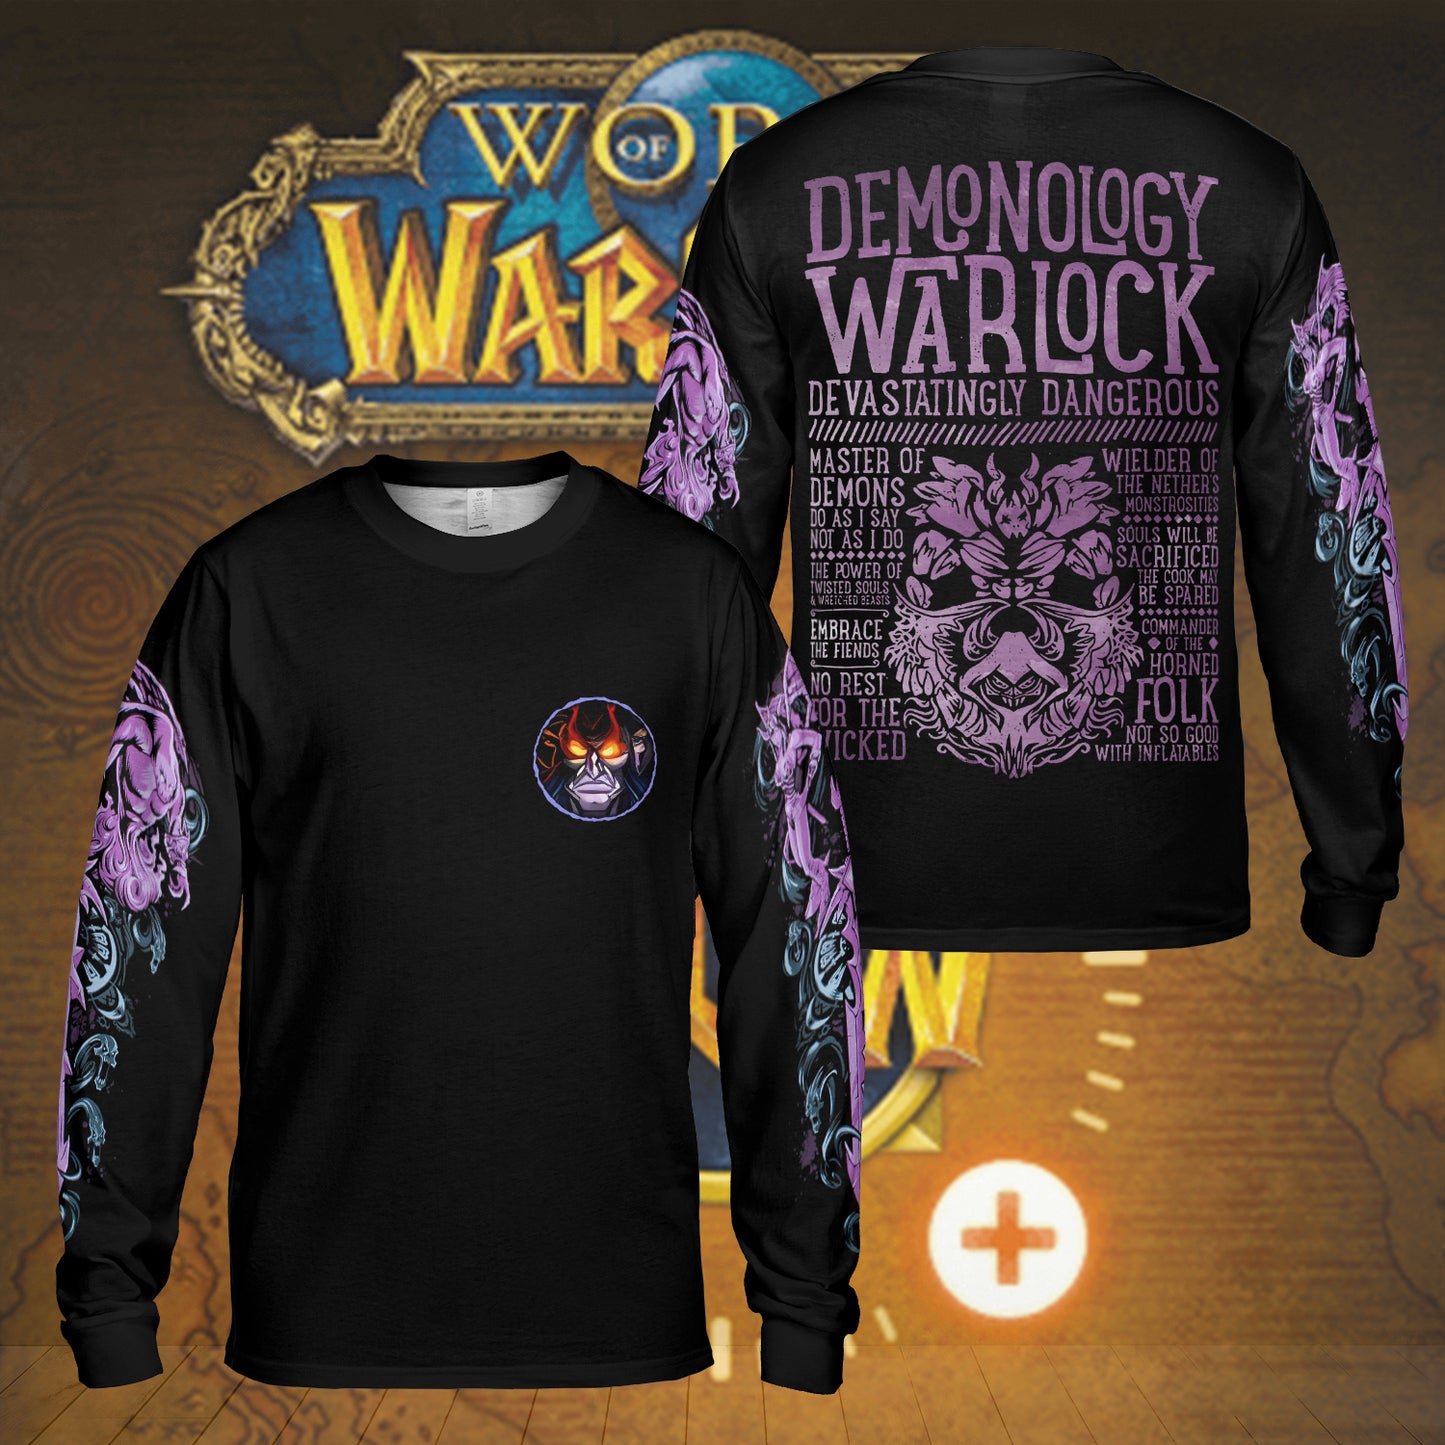 Demonology Warlock - Wow Class Guide V3 - AOP Long Sleeve Shirt